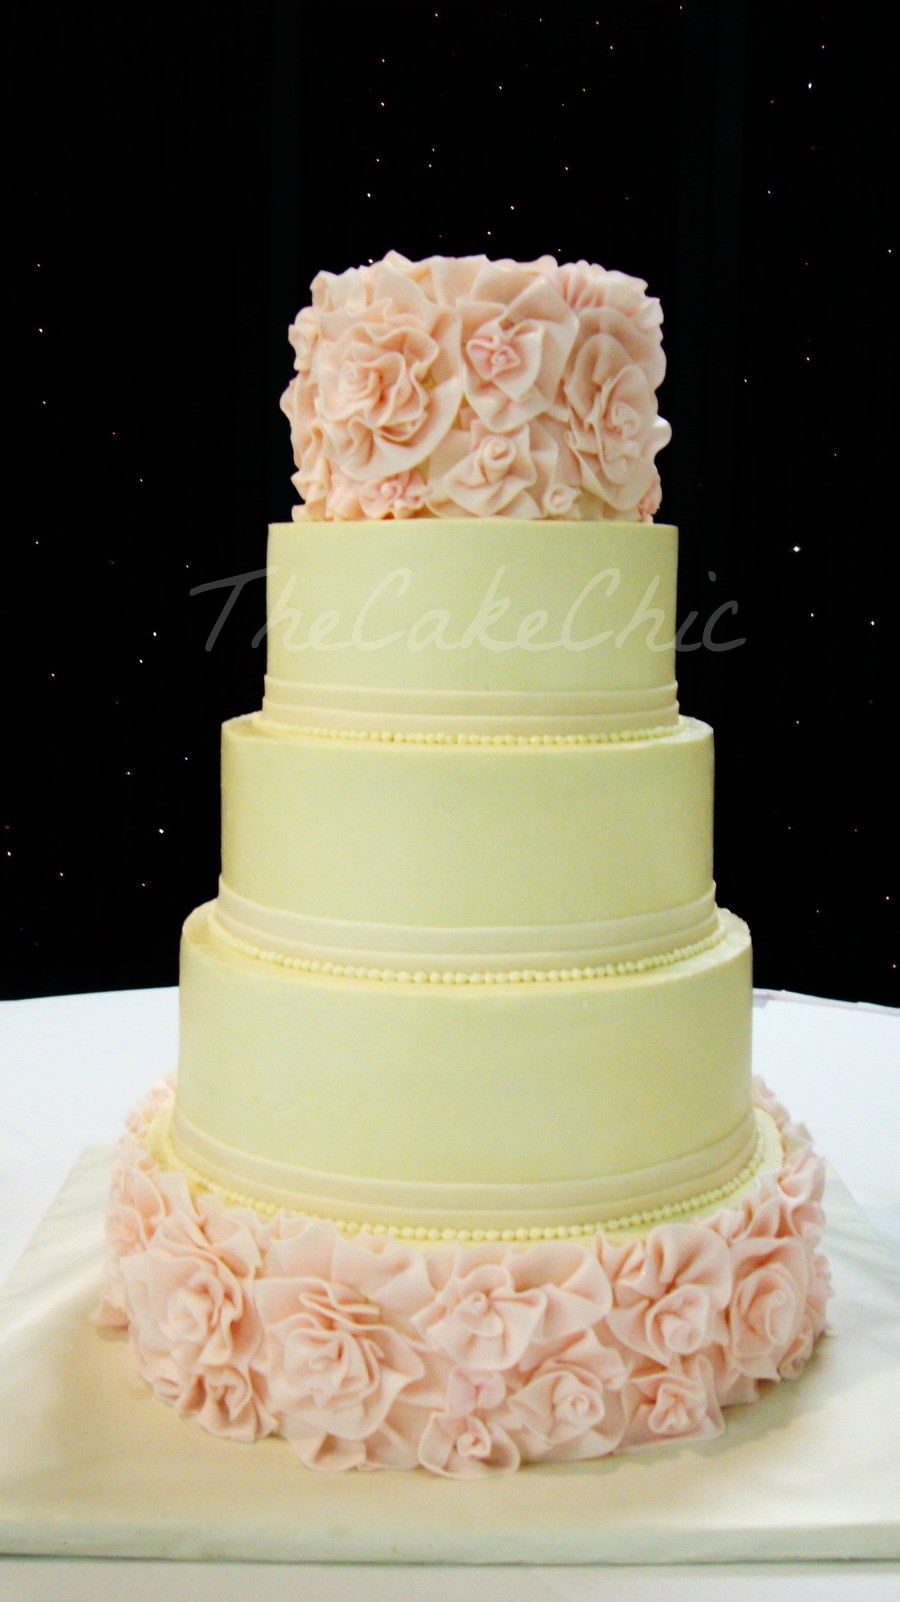 Chocolate And Vanilla Wedding Cakes
 Ivory And Blush Flower Ruffle Wedding Cake From Bottom